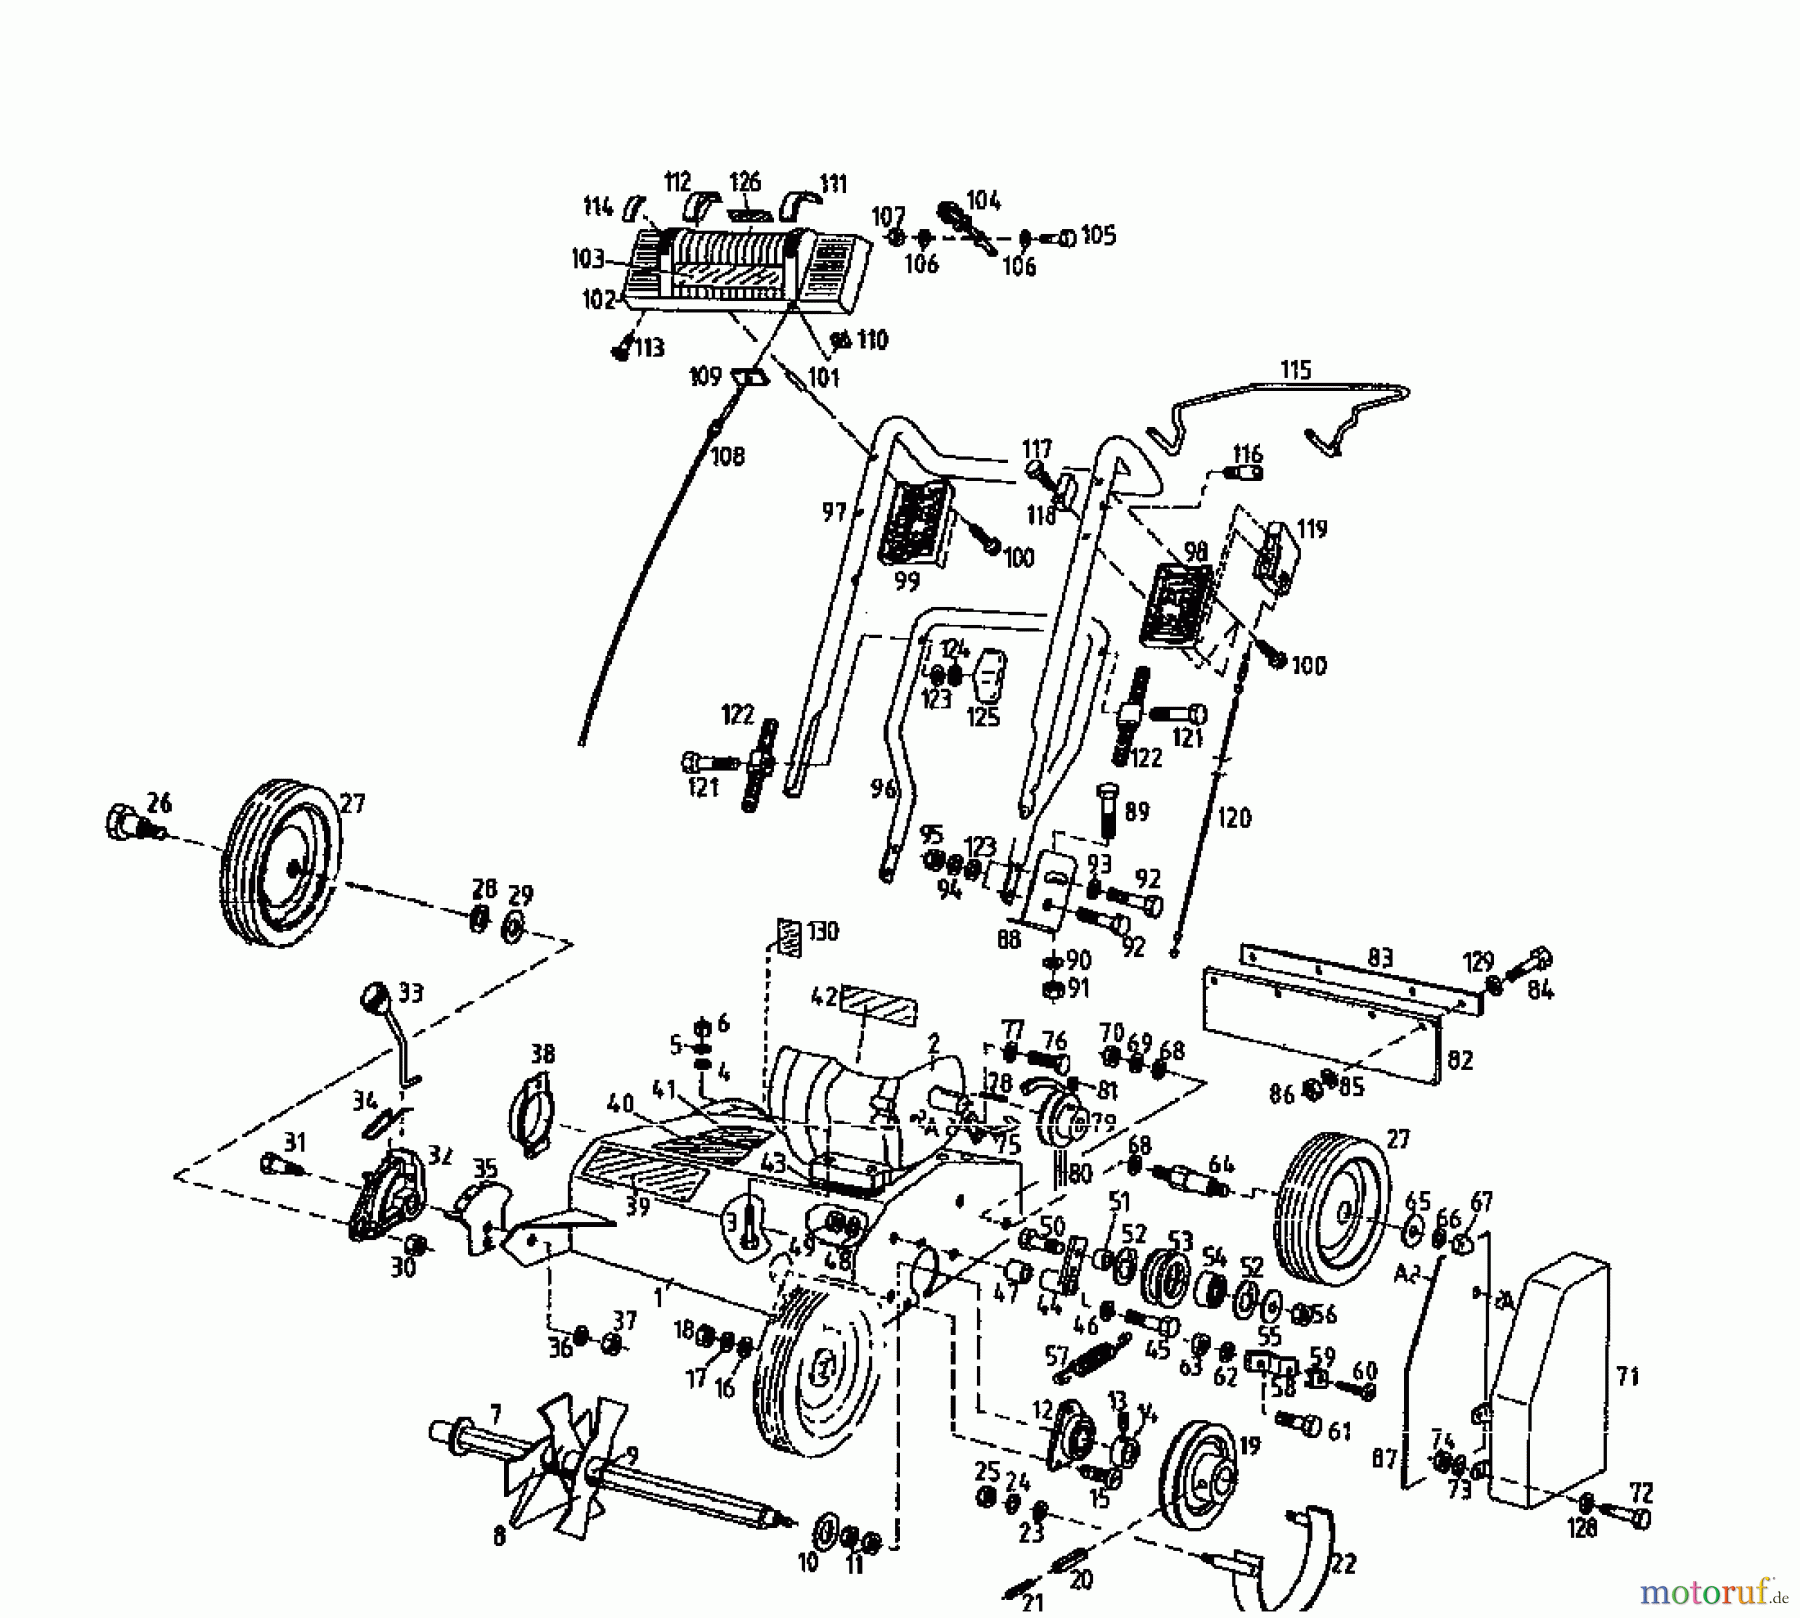  Gutbrod Petrol verticutter MV 504 00053.05  (1996) Basic machine